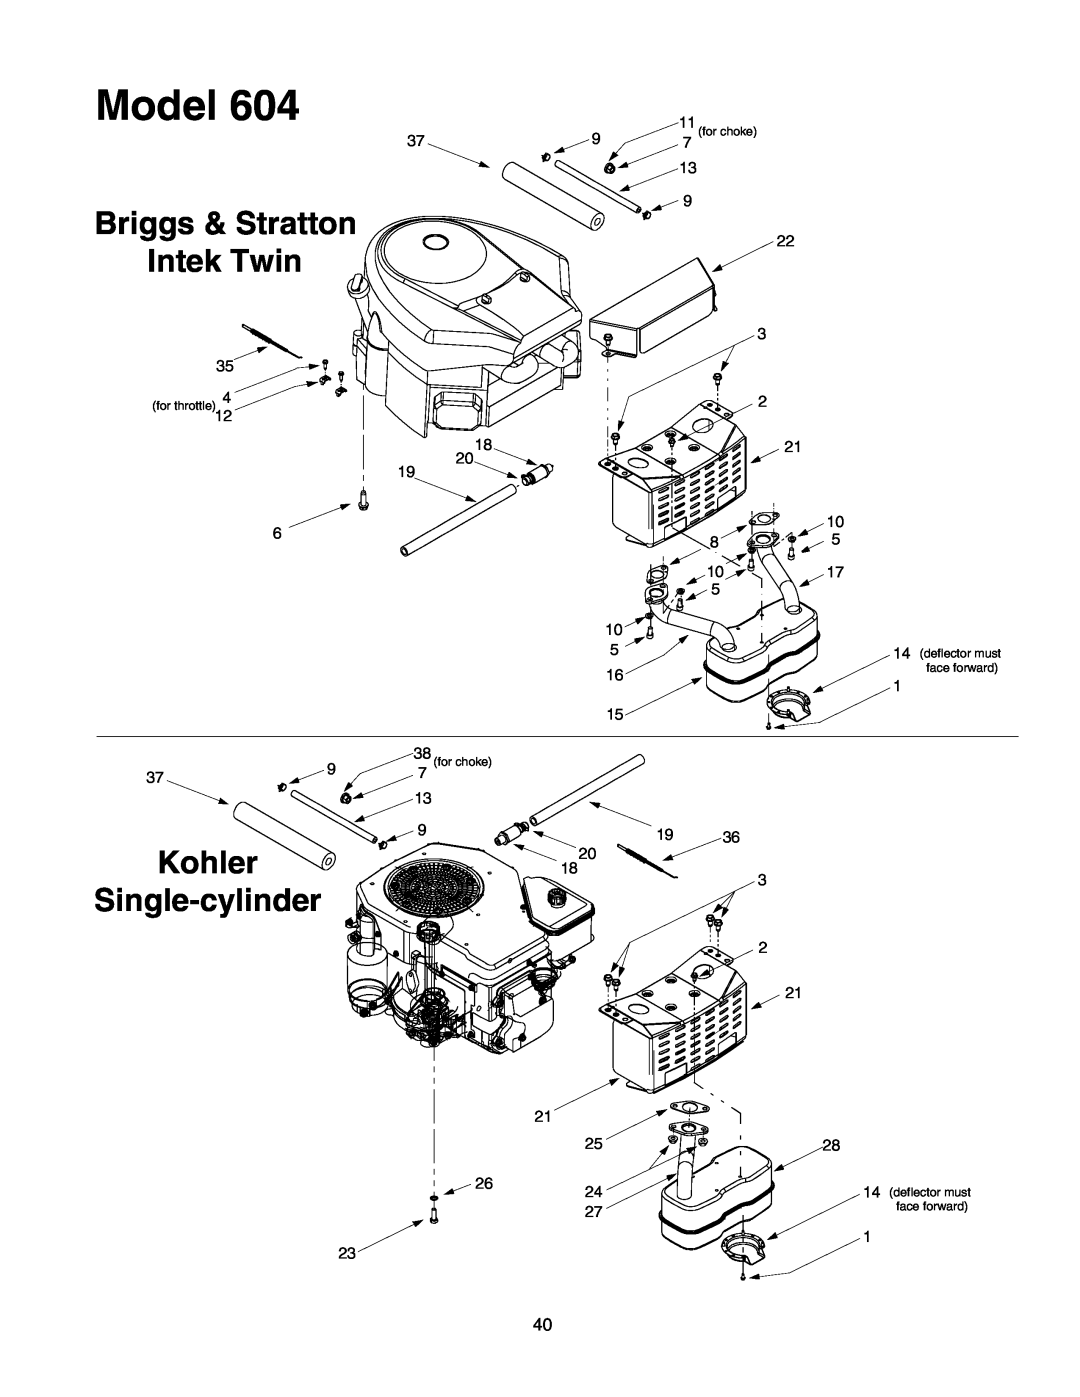 Yard-Man 604 manual Model, Briggs & Stratton, Intek Twin, Kohler Single-cylinder 